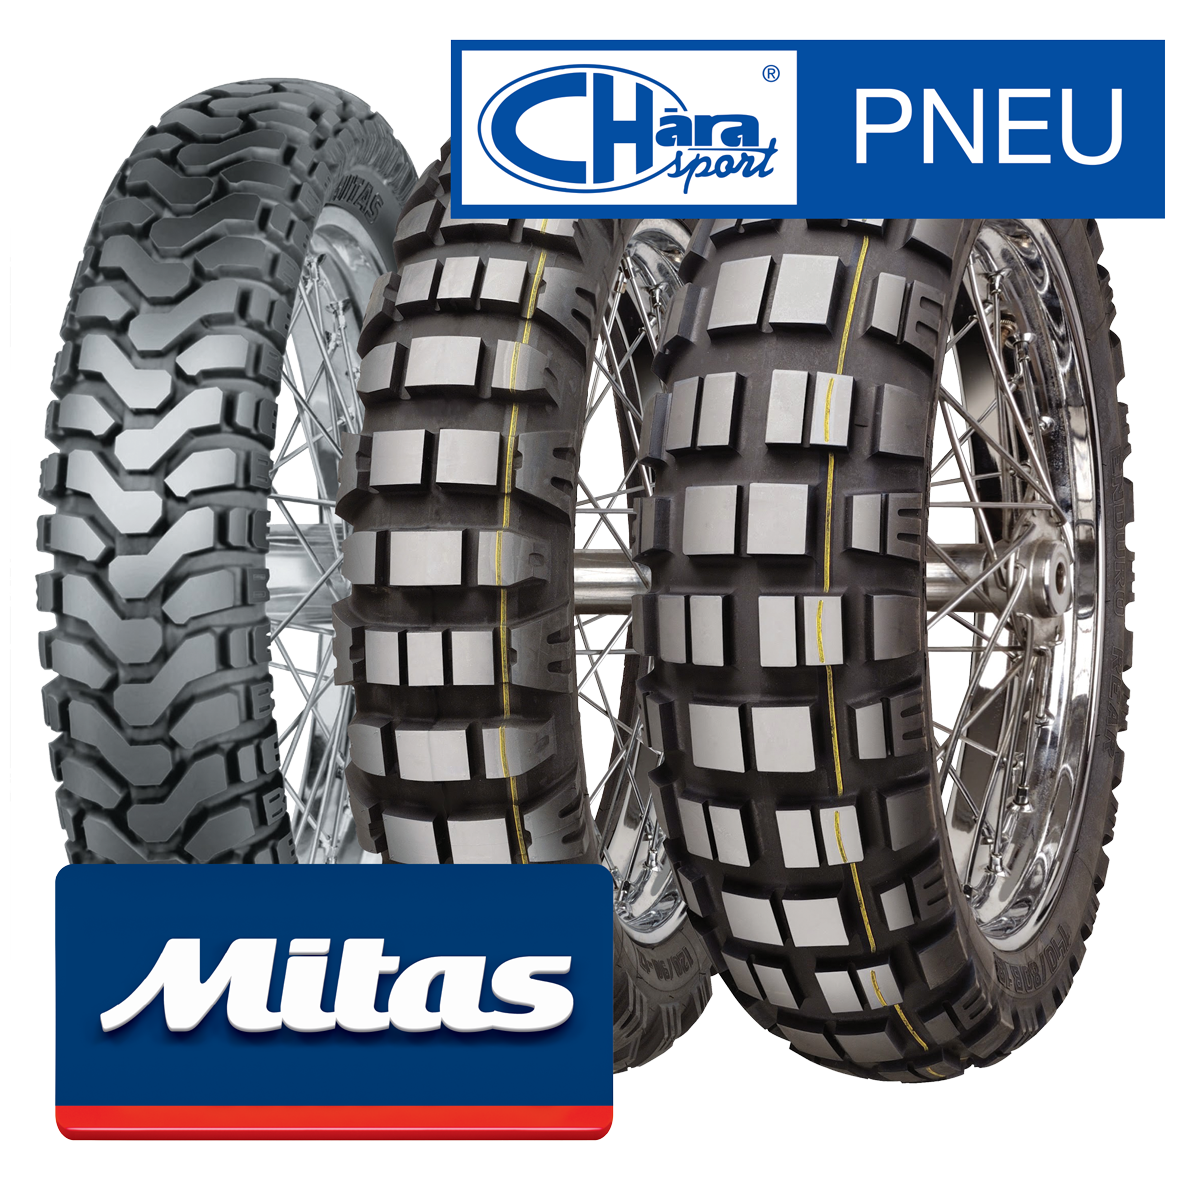 6 x sada pneumatik MITAS + kompletní pneuservis